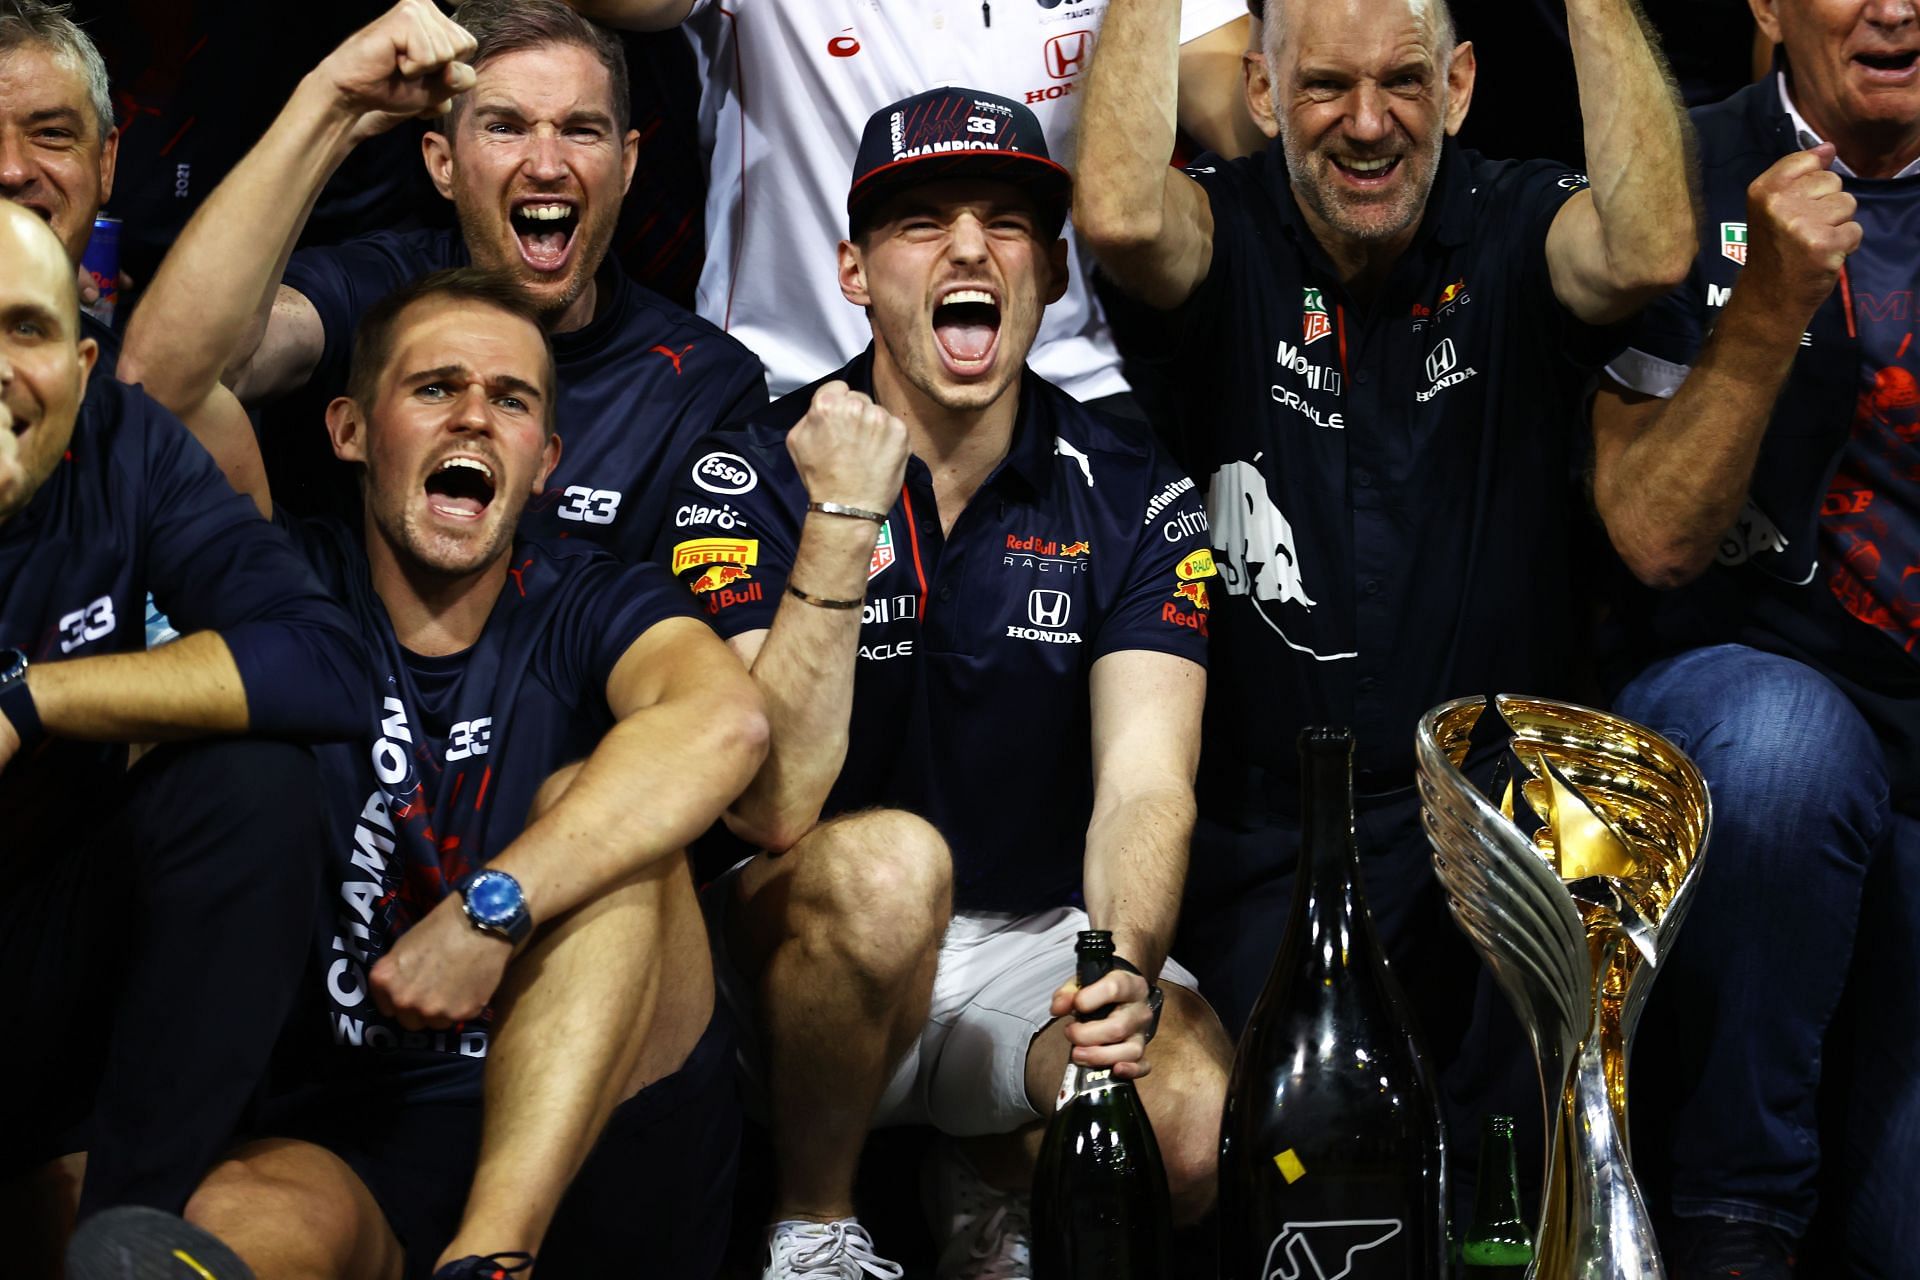 F1 Grand Prix of Abu Dhabi - Max Verstappen